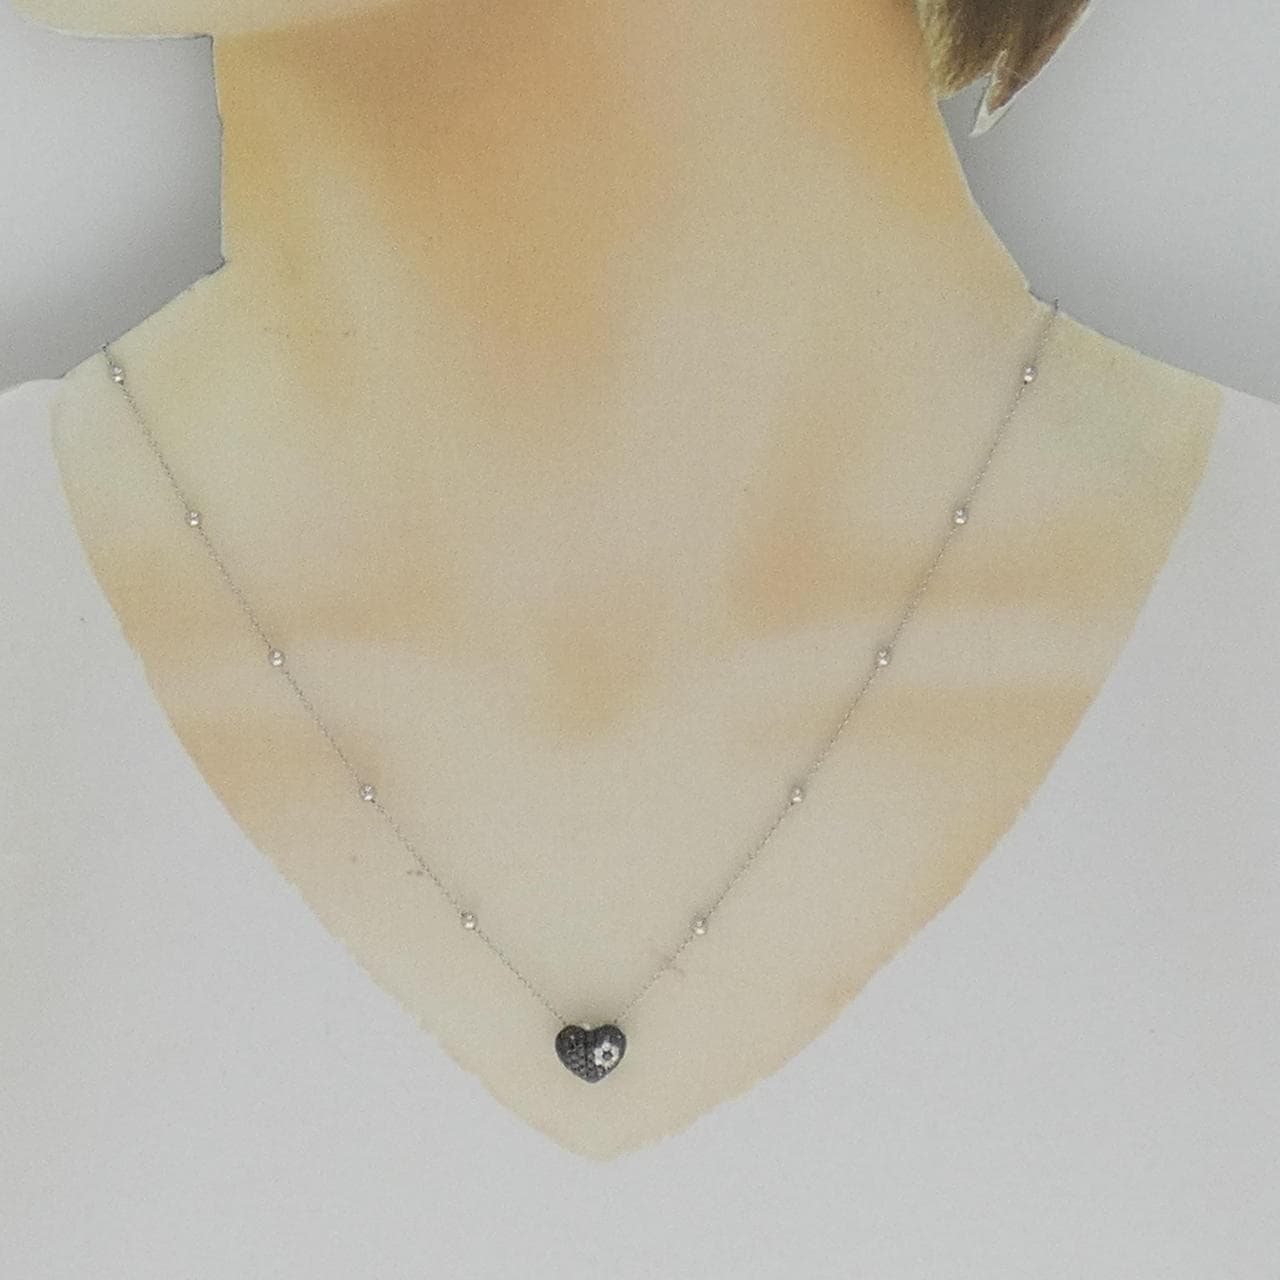 K18WG/750WG heart Diamond necklace 0.35CT